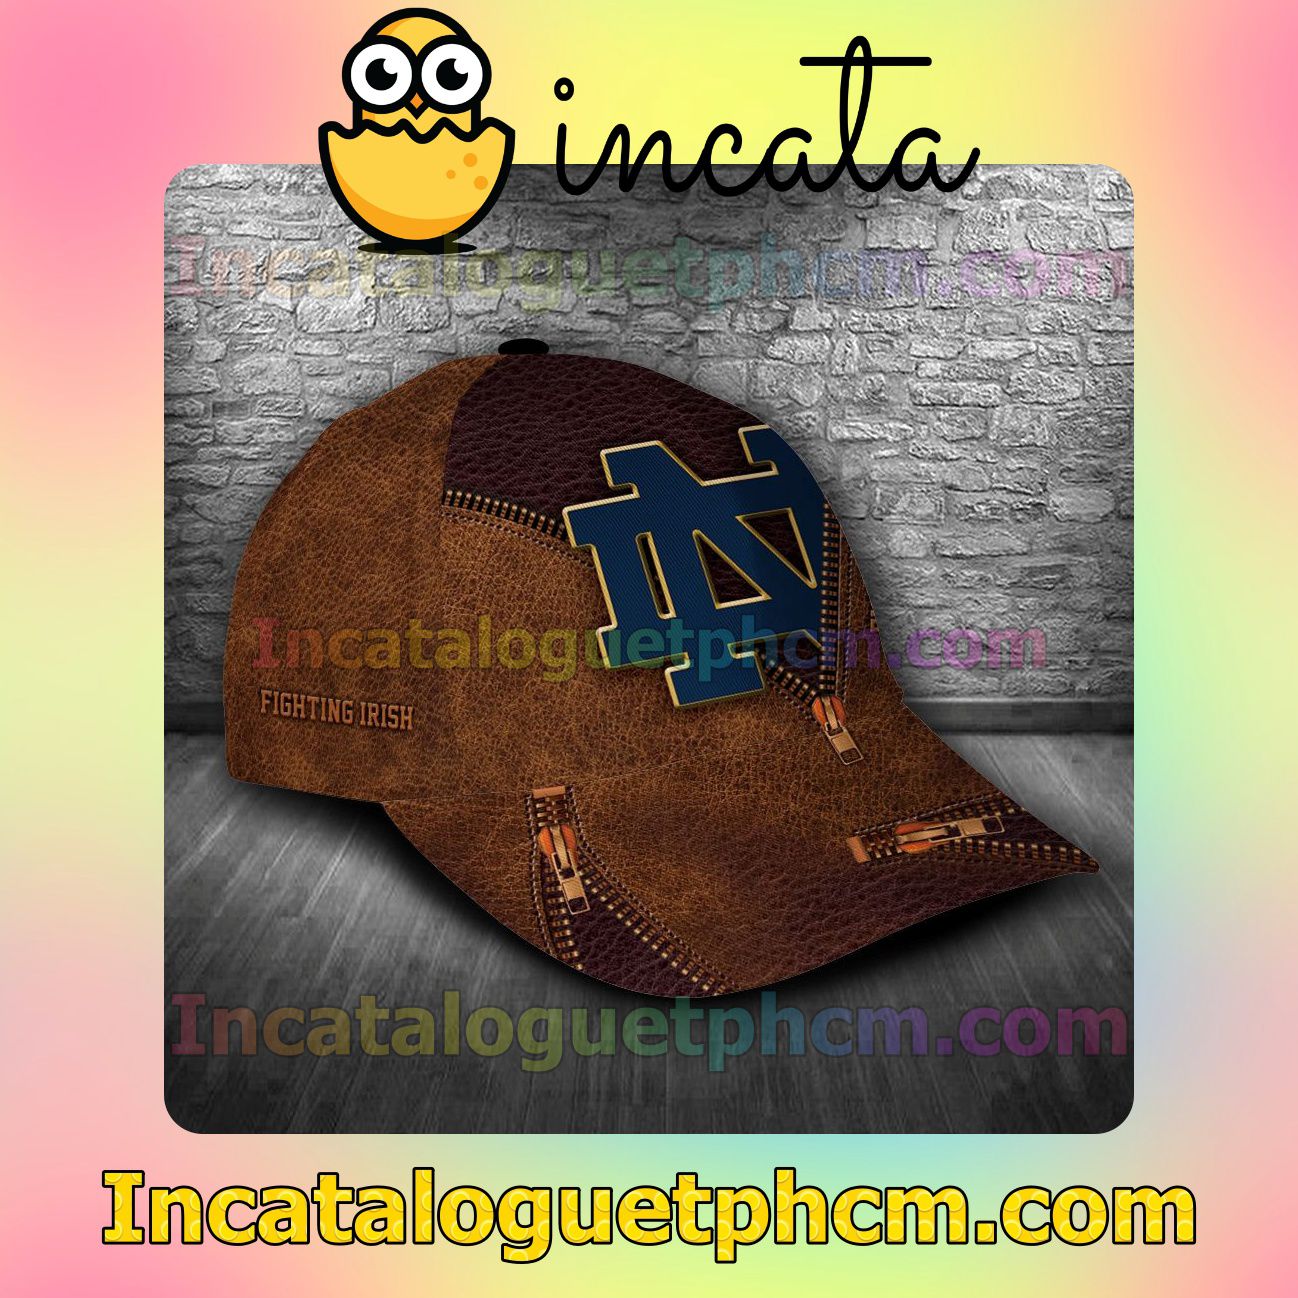 Sale Off Notre Dame Fighting Irish Leather Zipper Print Customized Hat Caps